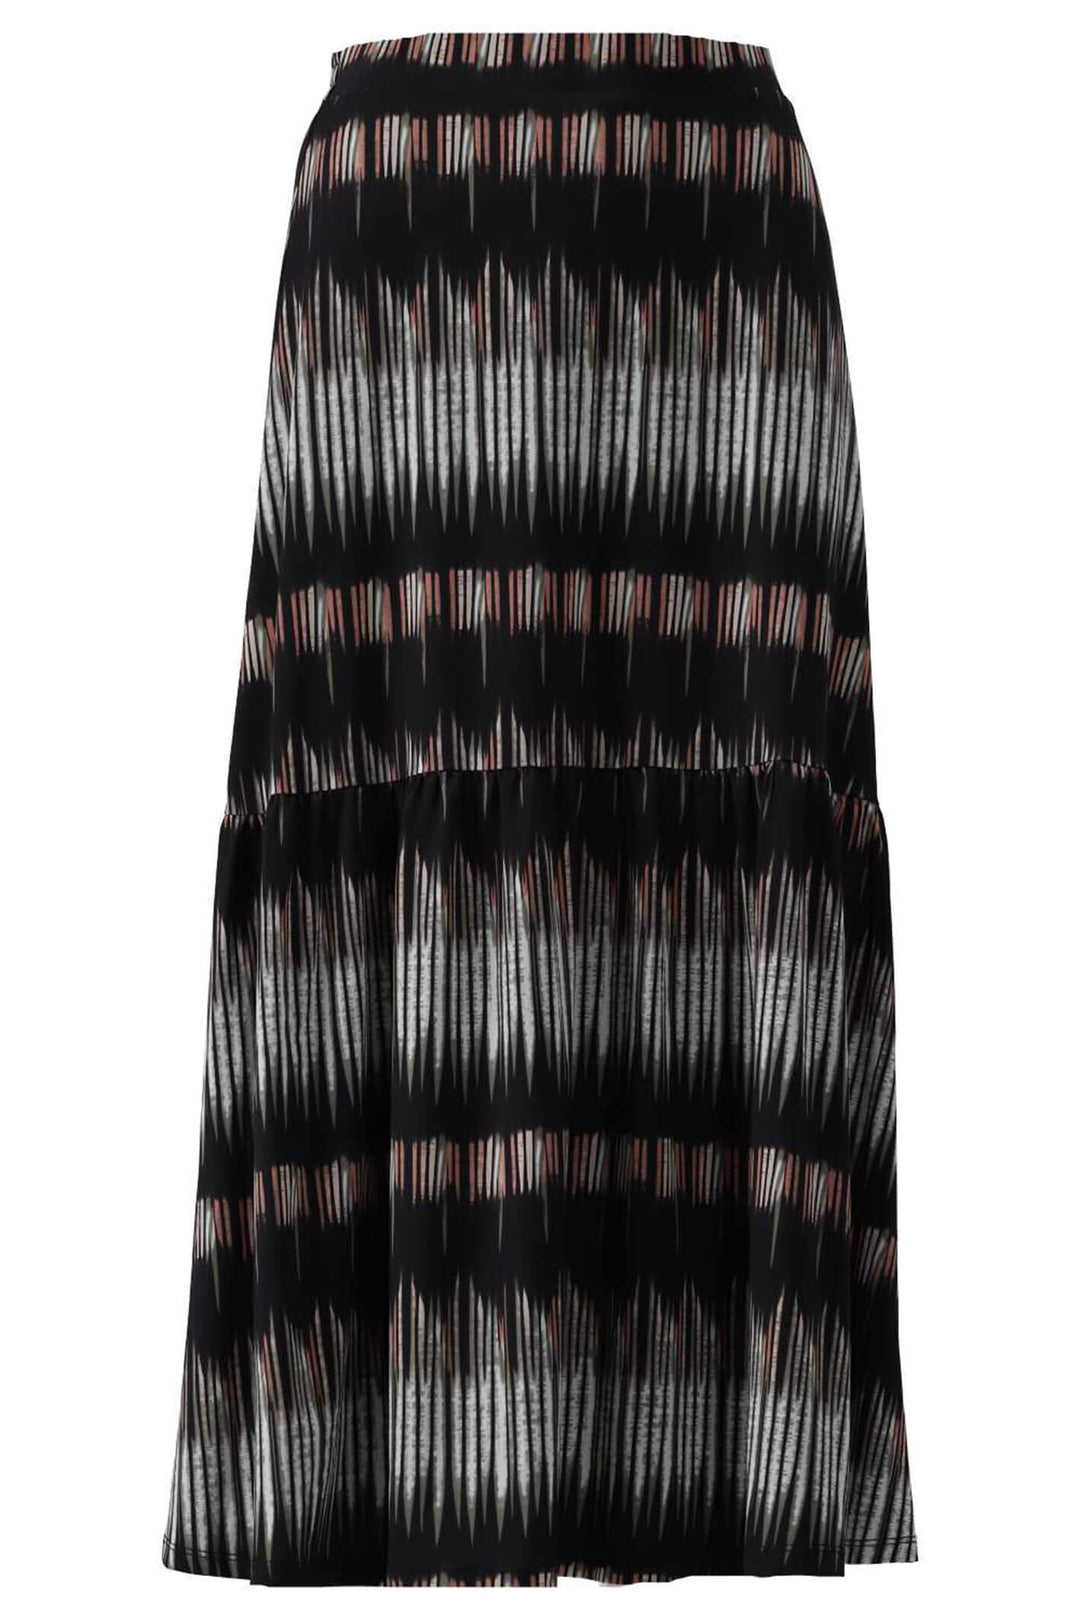 K Design V337 P429 Black Print Long Skirt - Experience Boutique